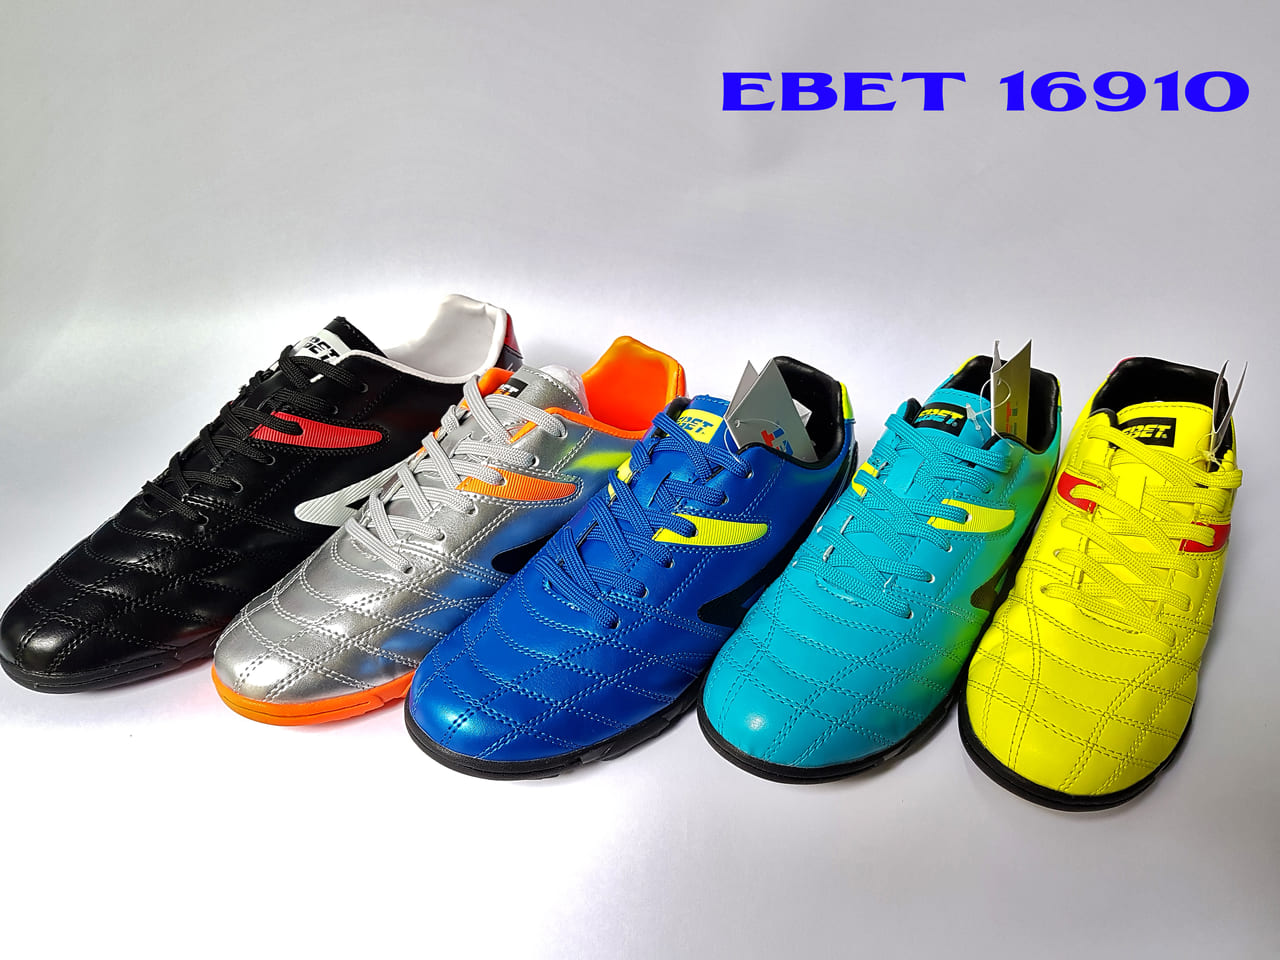 Giày đá bóng EBET 16910